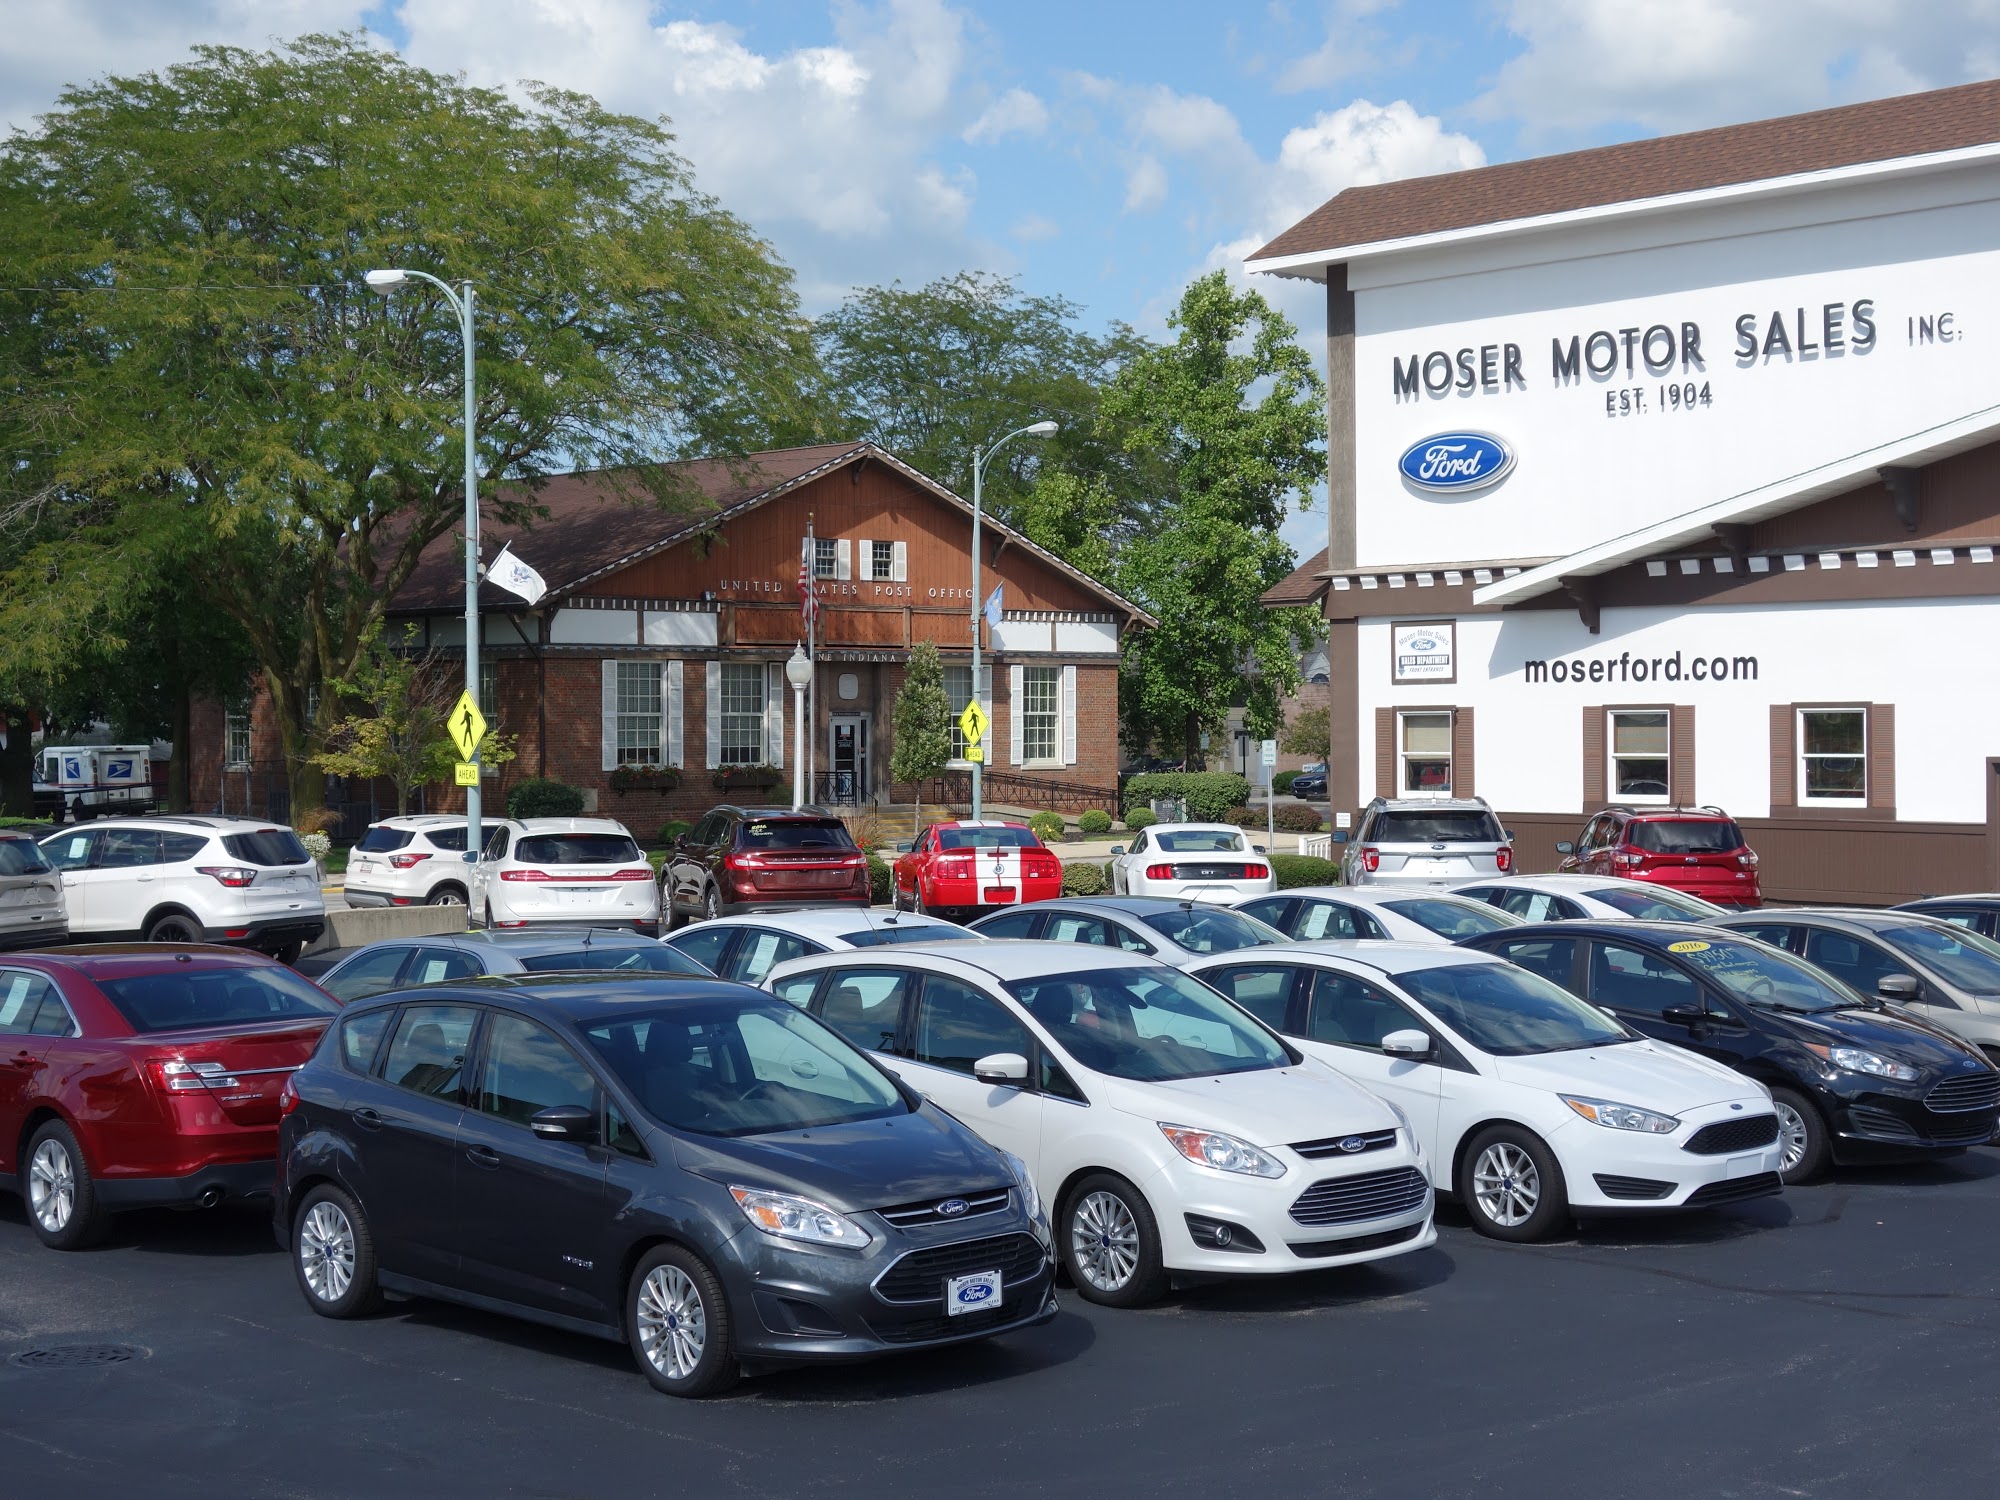 Moser Motor Sales Inc